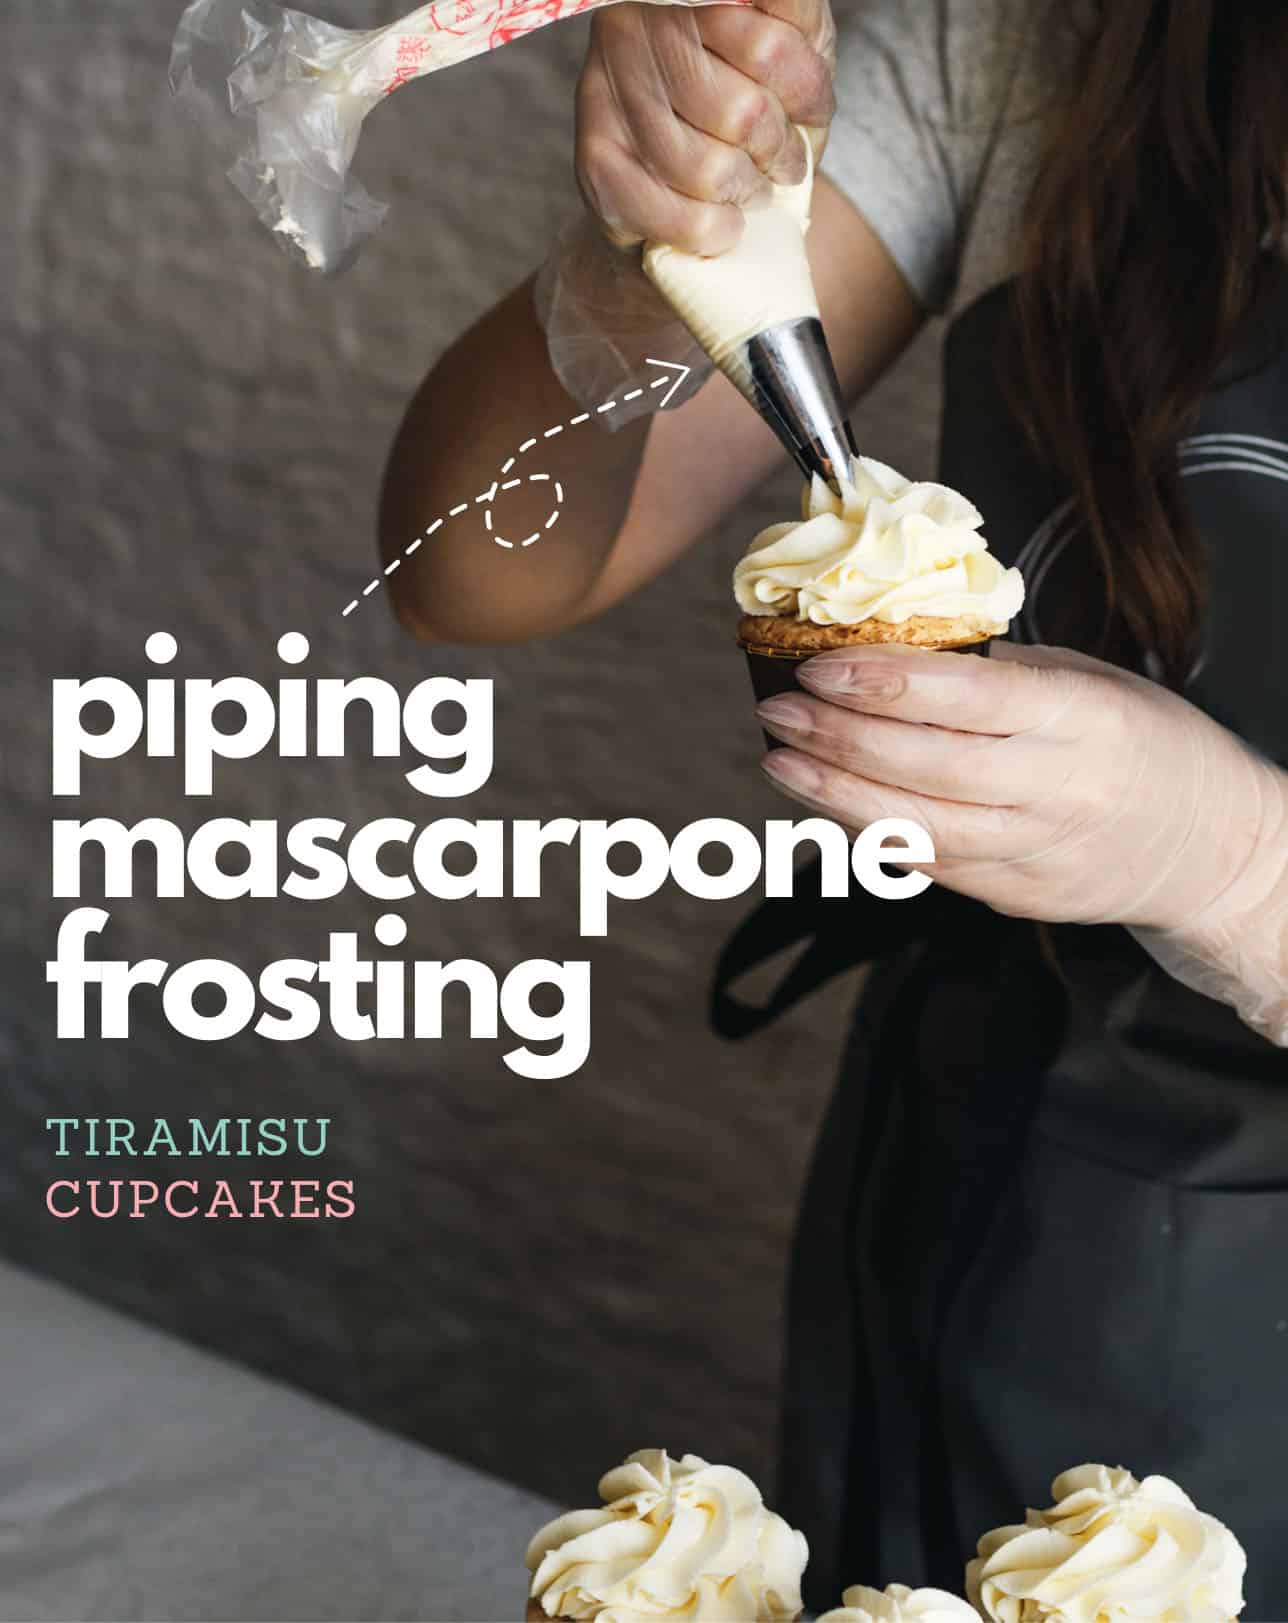 Luscious mascarpone frosting being piped onto espresso-infused Tiramisu cupcakes.